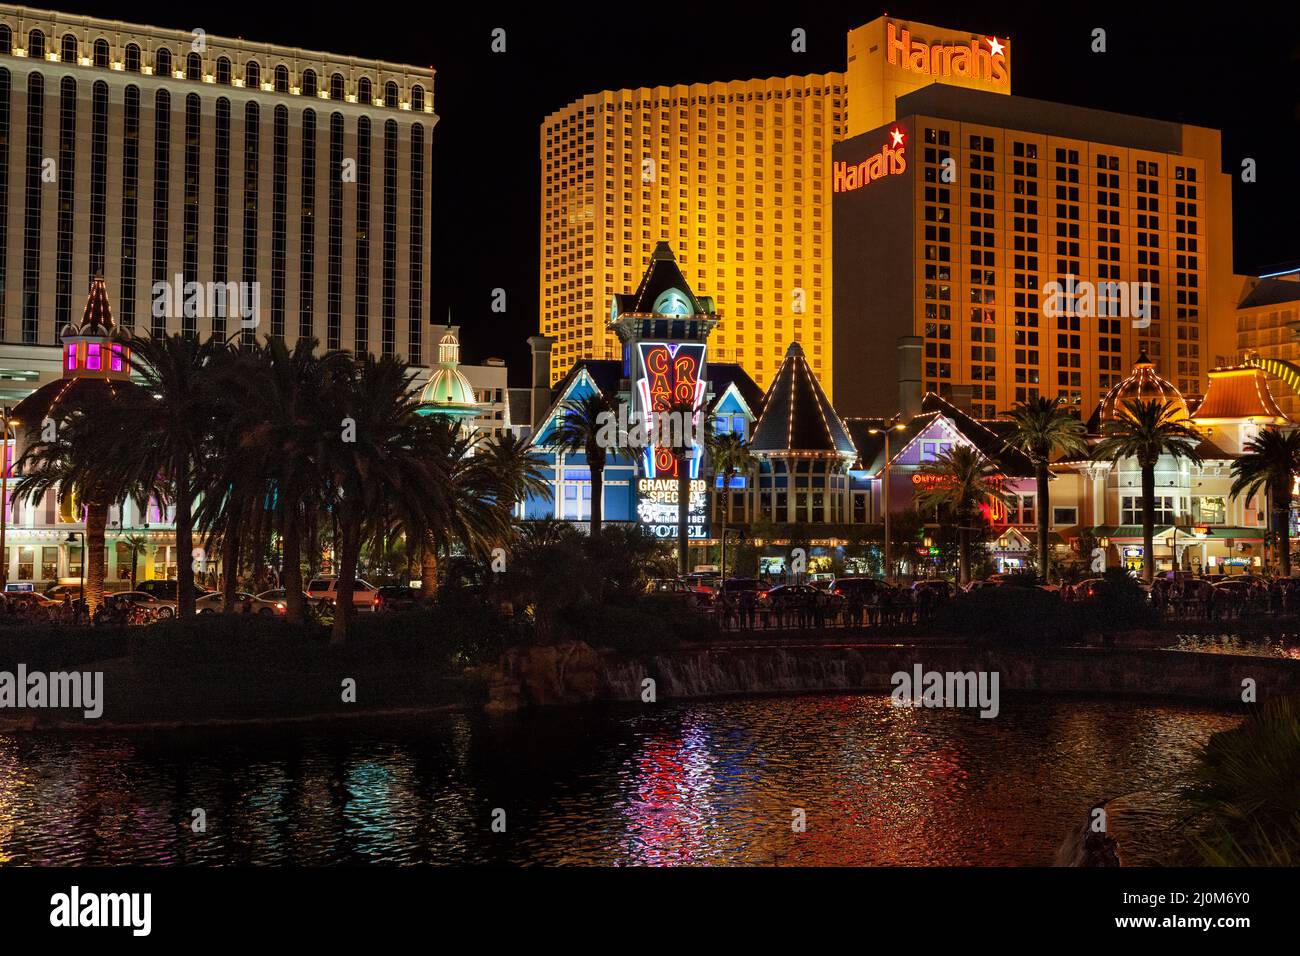 Las Vegas, Nevada - September 2, 2011: The Luxurious Louis Vuitton And  Prada Shops On The Famous Las Vegas Strip, Las Vegas, Nevada Stock Photo,  Picture and Royalty Free Image. Image 10793020.